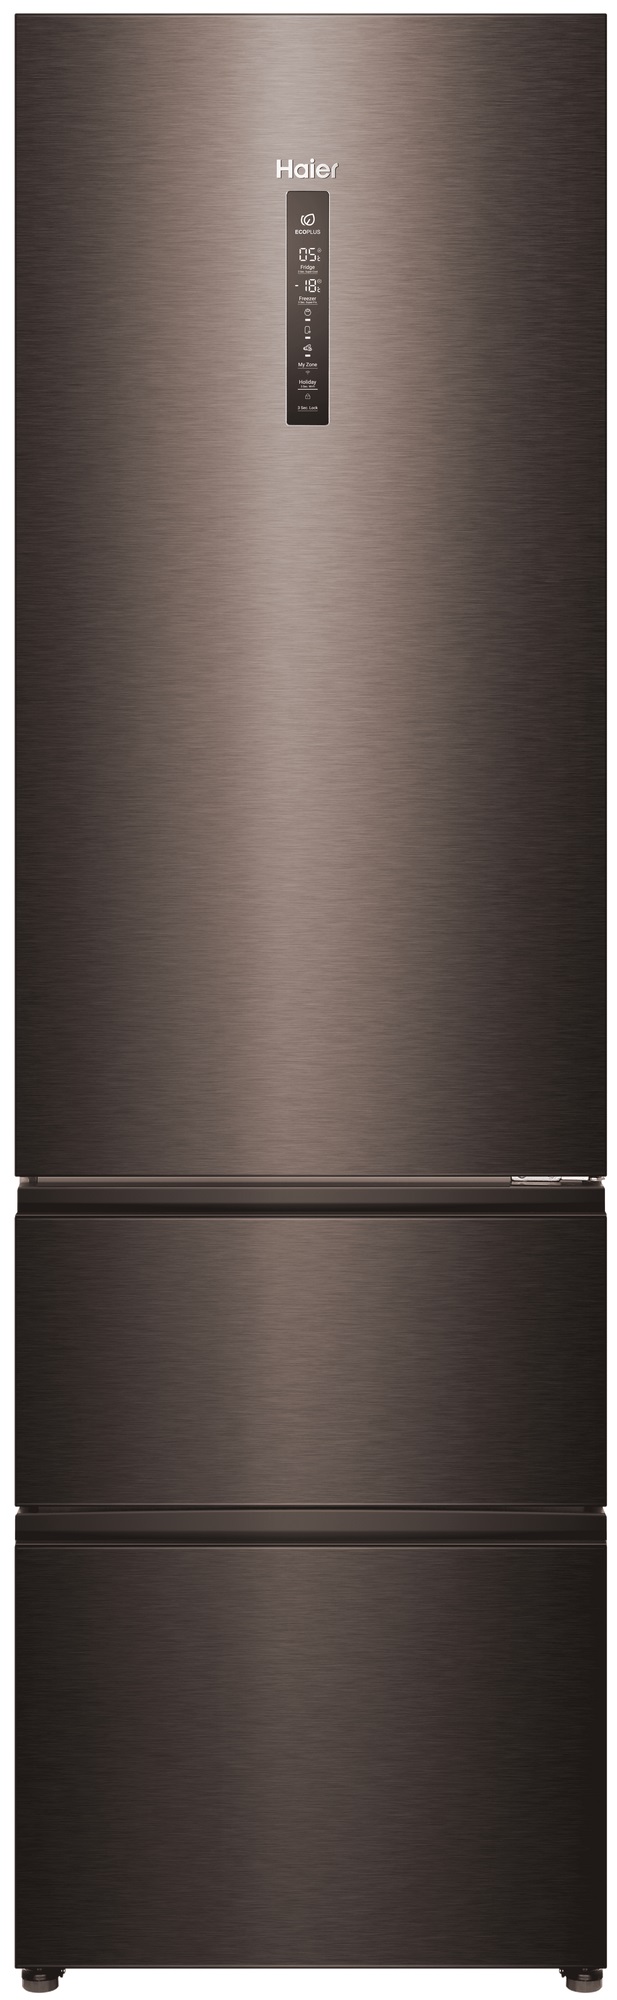 Холодильник Haier A4F739CDBGU1 серый пылесос haier hvc150sw зеленый серый